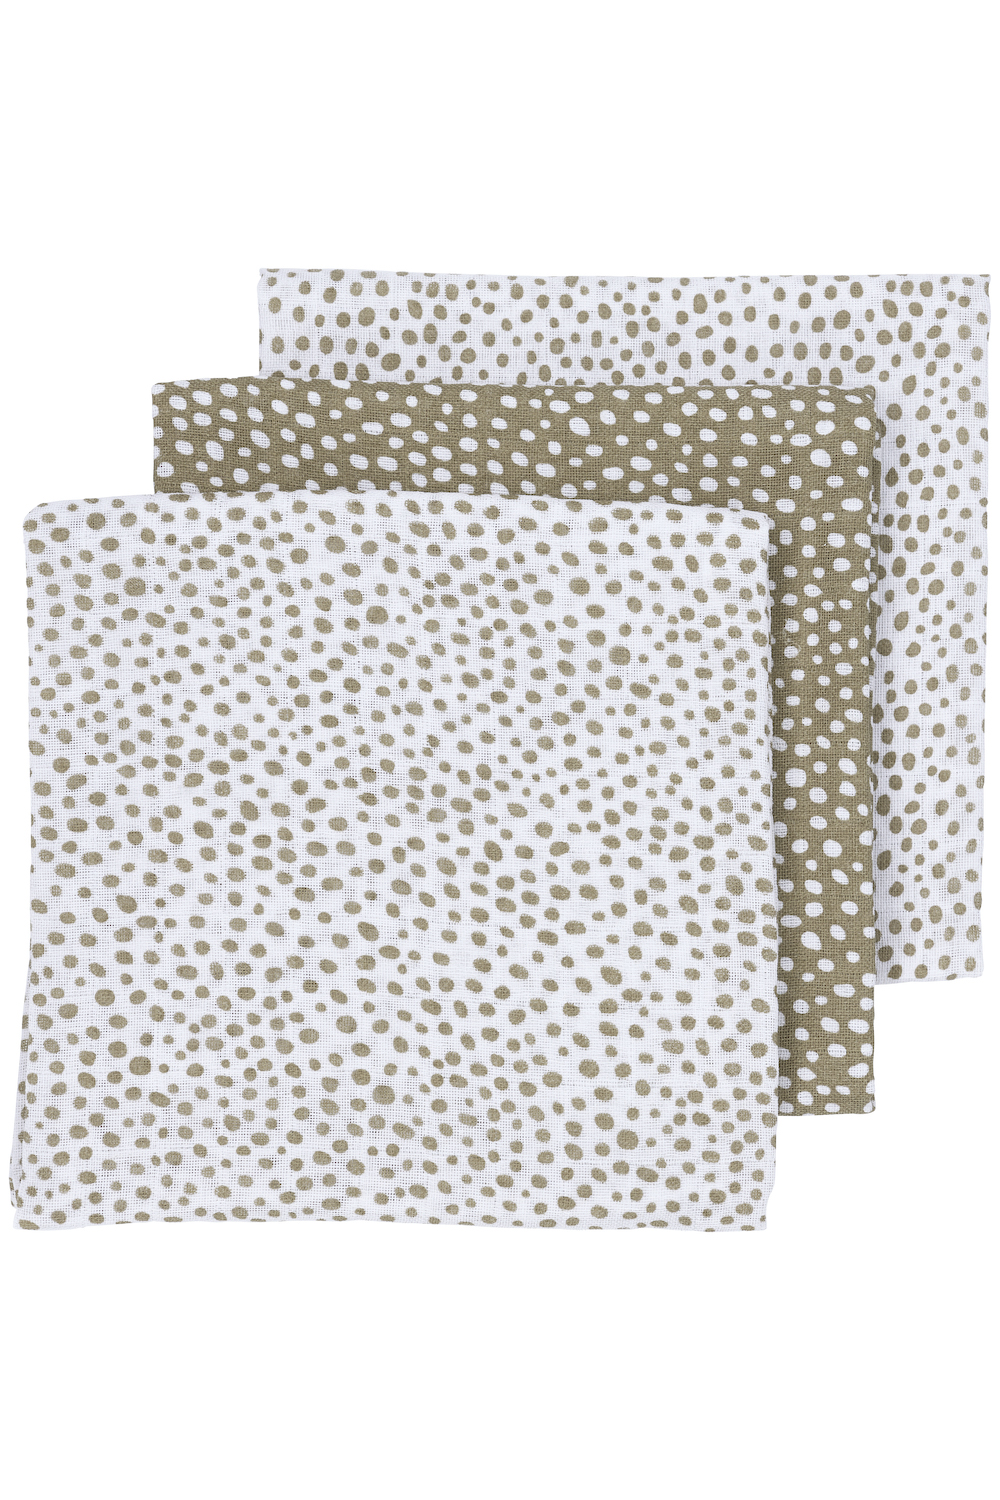 Square 3-pack Cheetah - taupe - 70x70cm